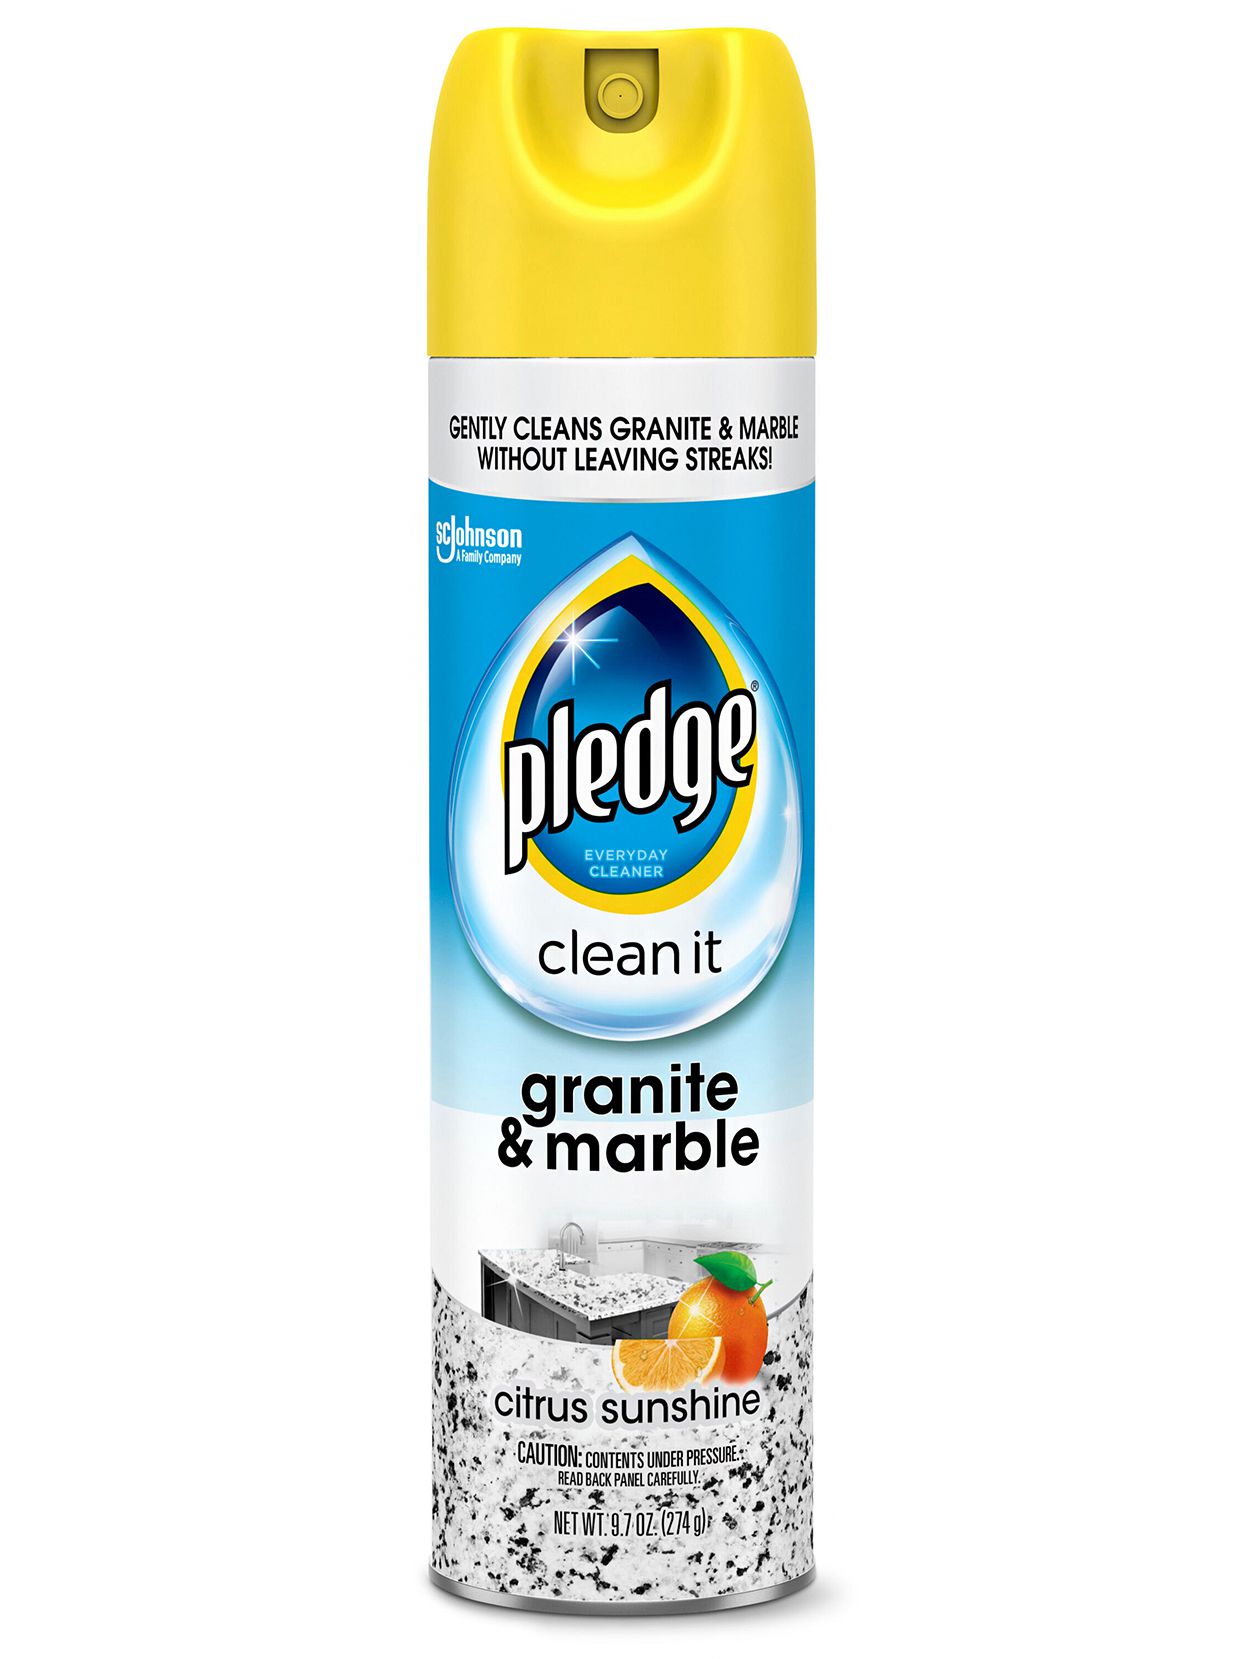 Pledge Granite & Marble Citrus Sunshine Spray